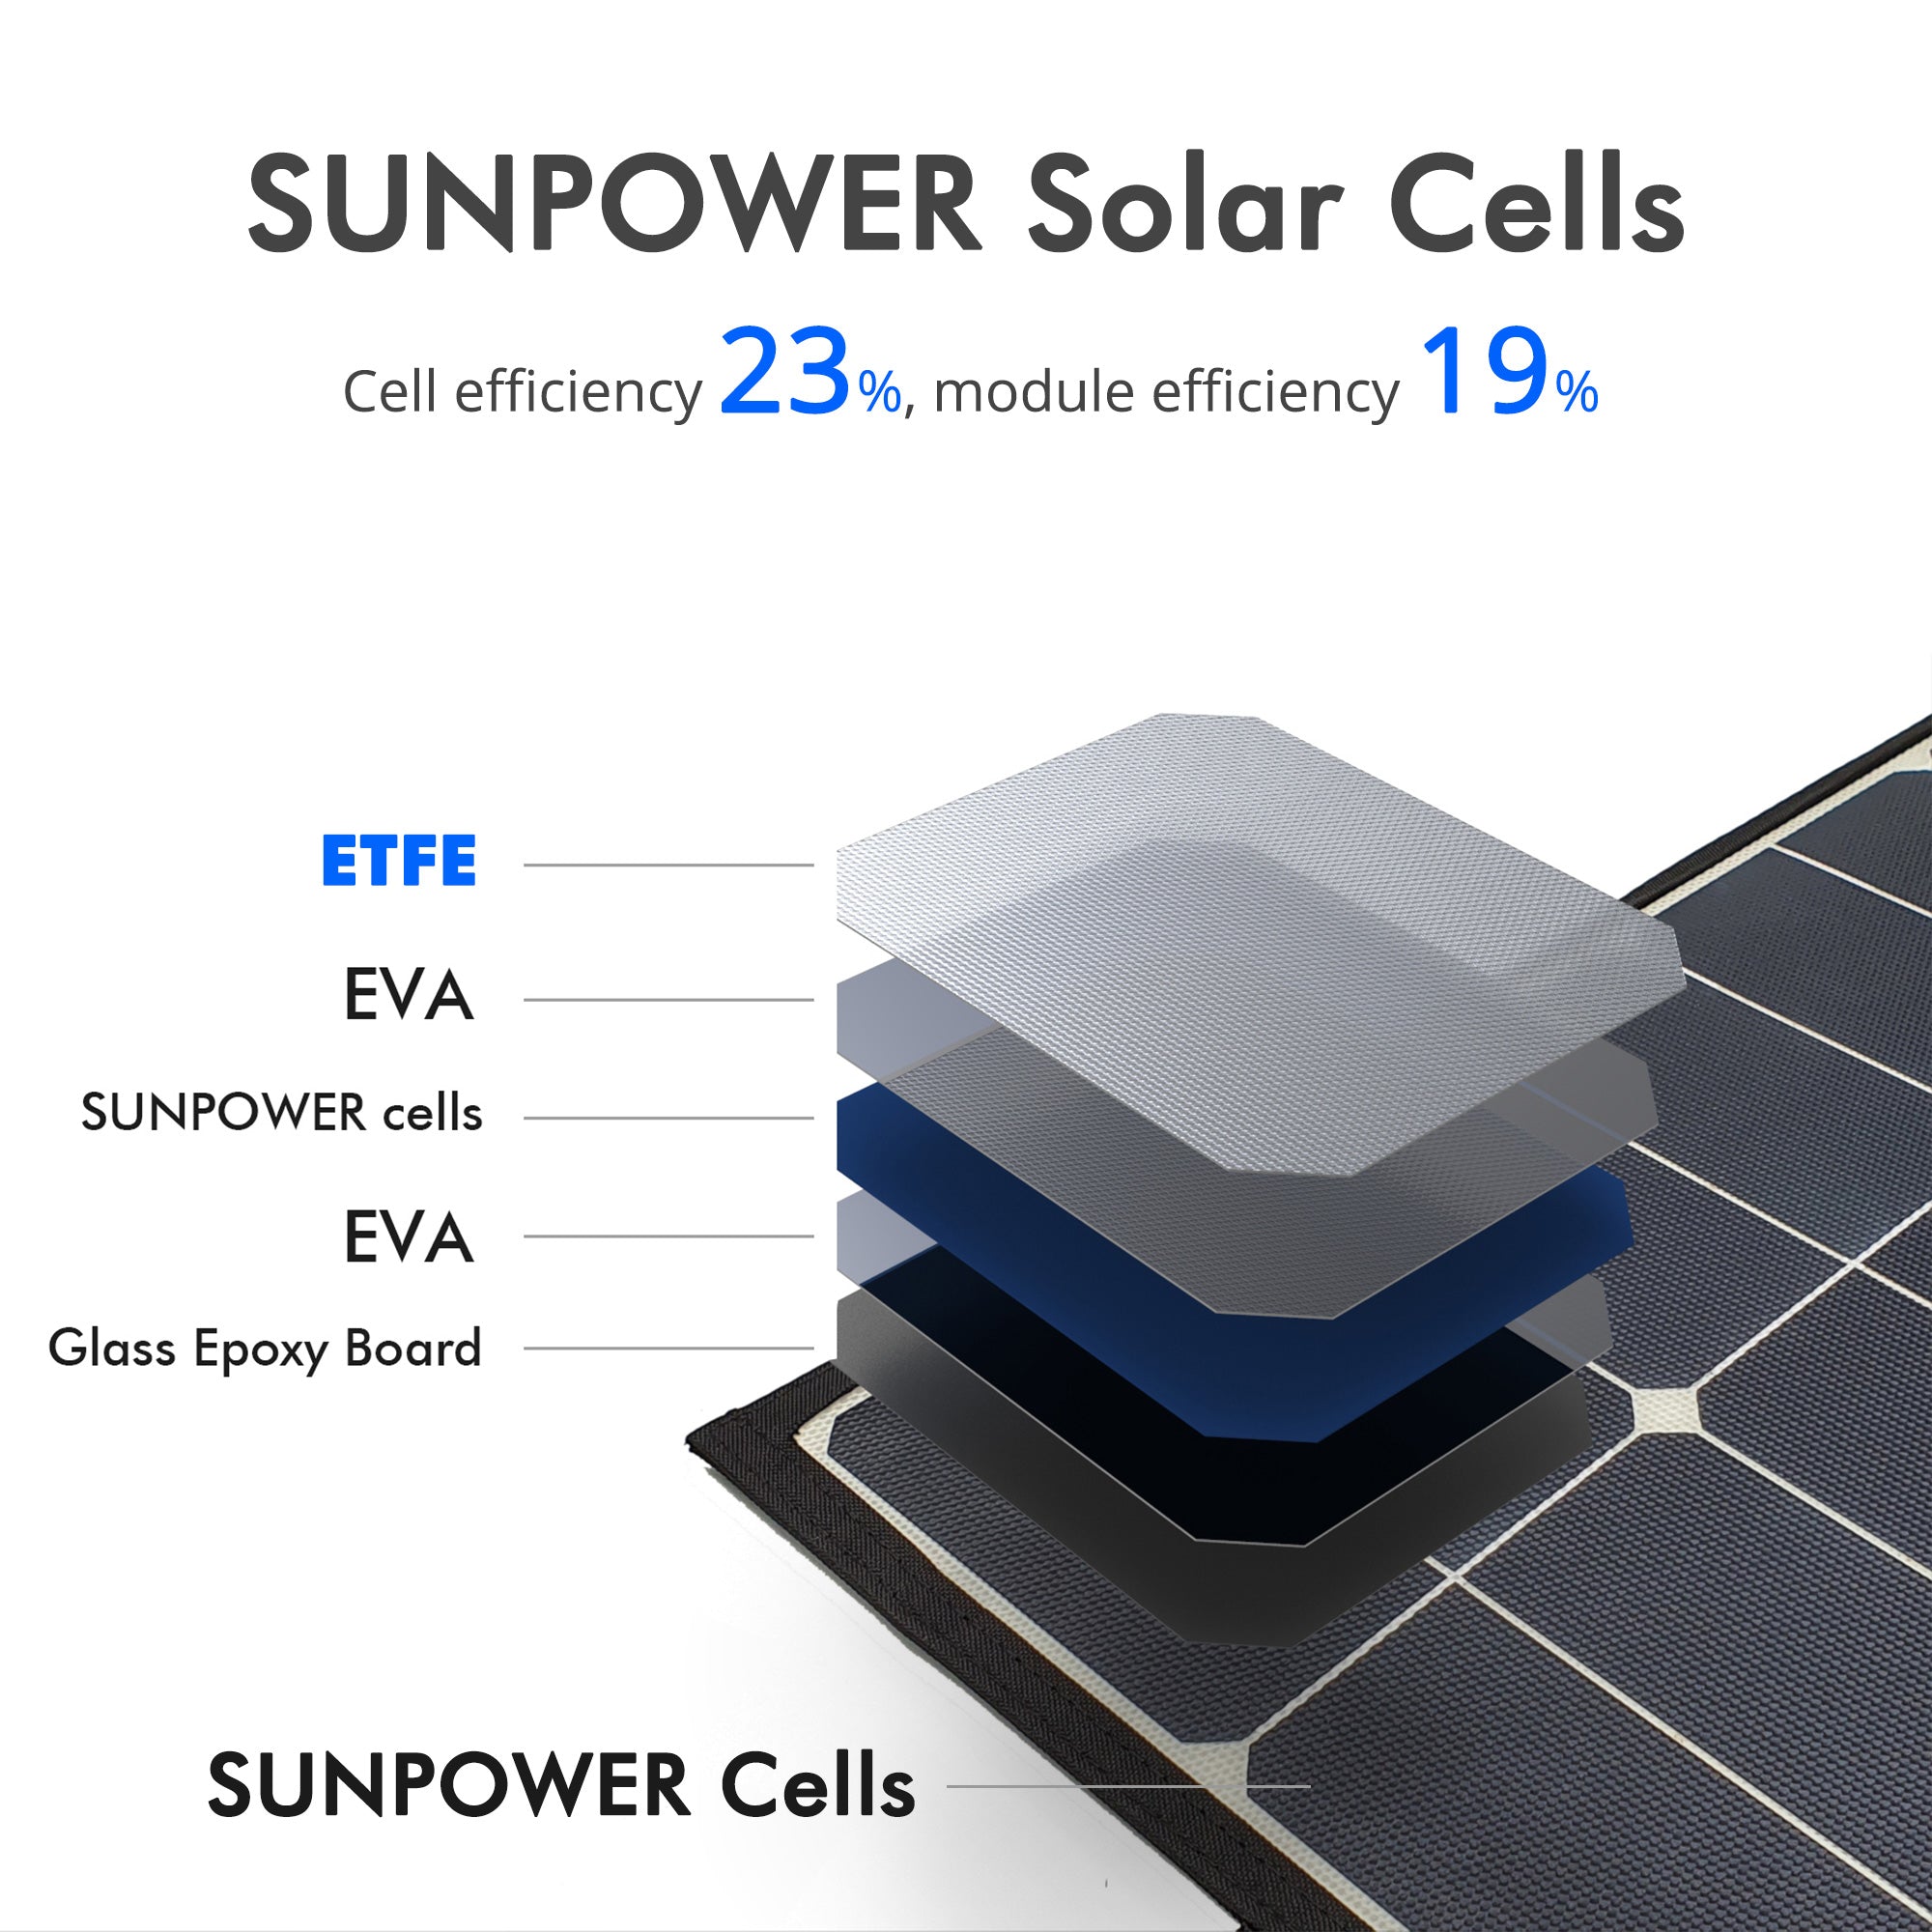 ACOPower 50W faltbares Solarpanel